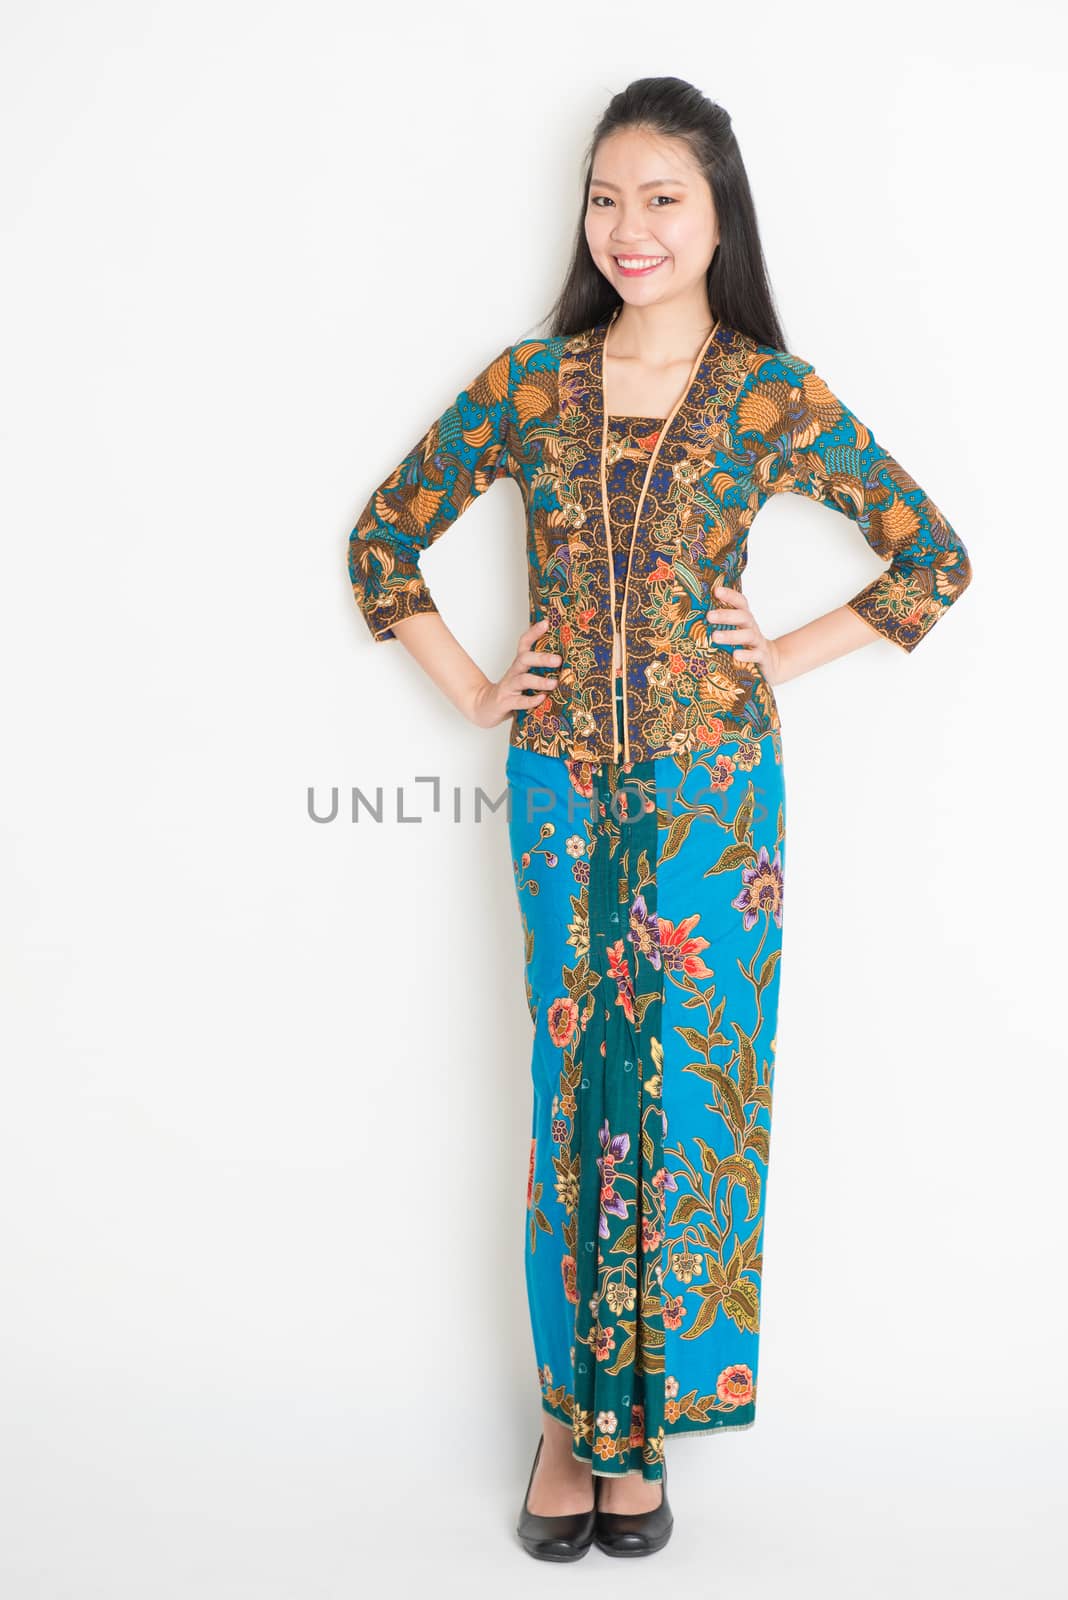 Full body Southeast Asian woman in batik dress standing on plain background.